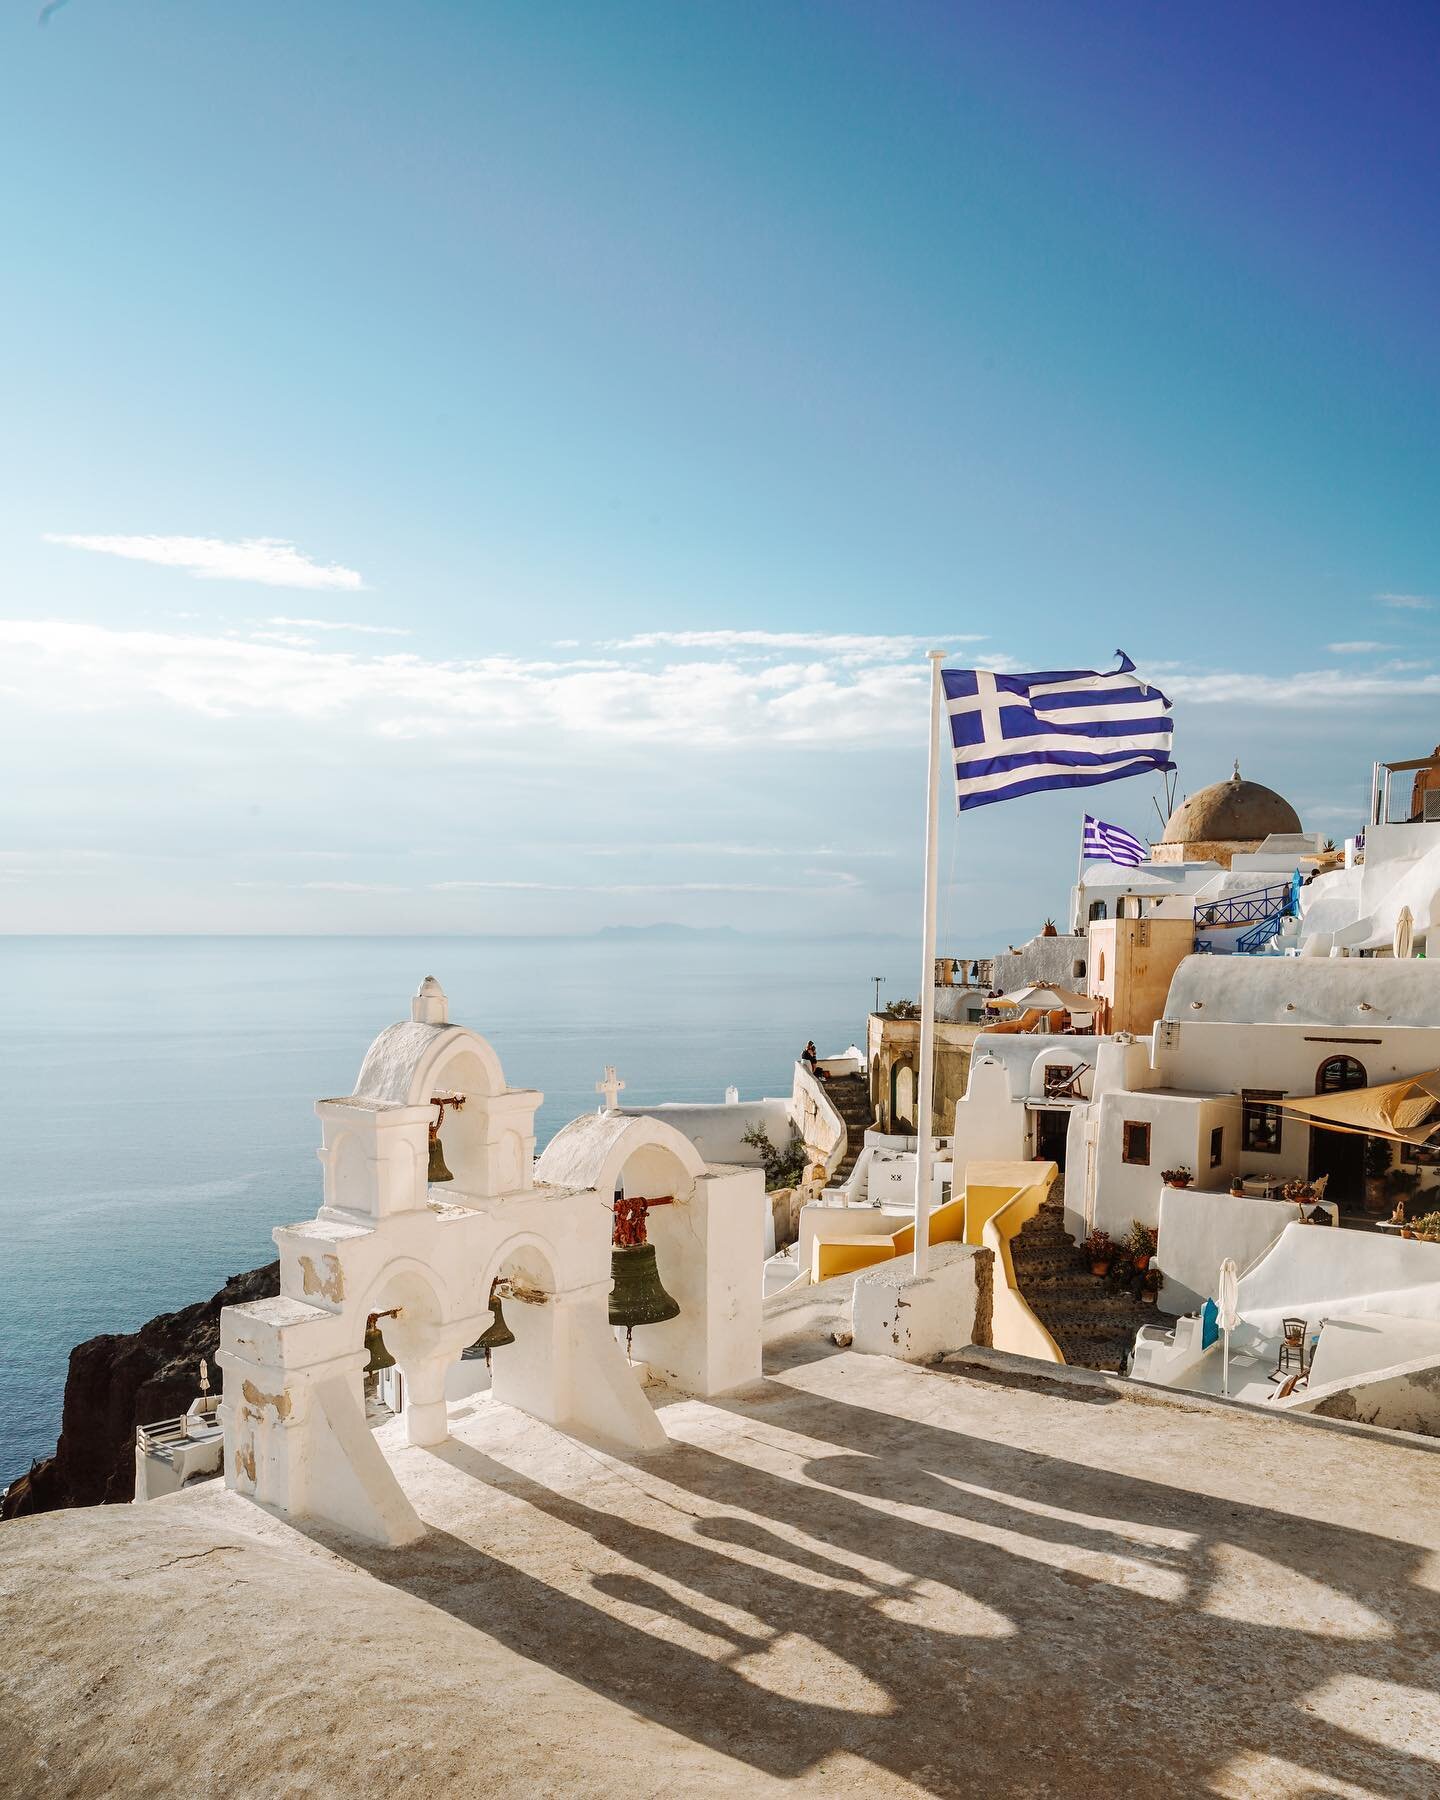 Still got Greece 🇬🇷 on our mind 
.
.
.
#greece #santorini #milos #navager #roamtheplanet #welivetoexplore #greekislands #travelgram #nowdiscovering #seeyourcity #neverstopexploring #cyclades_islands #voyaged #takingyouplaces